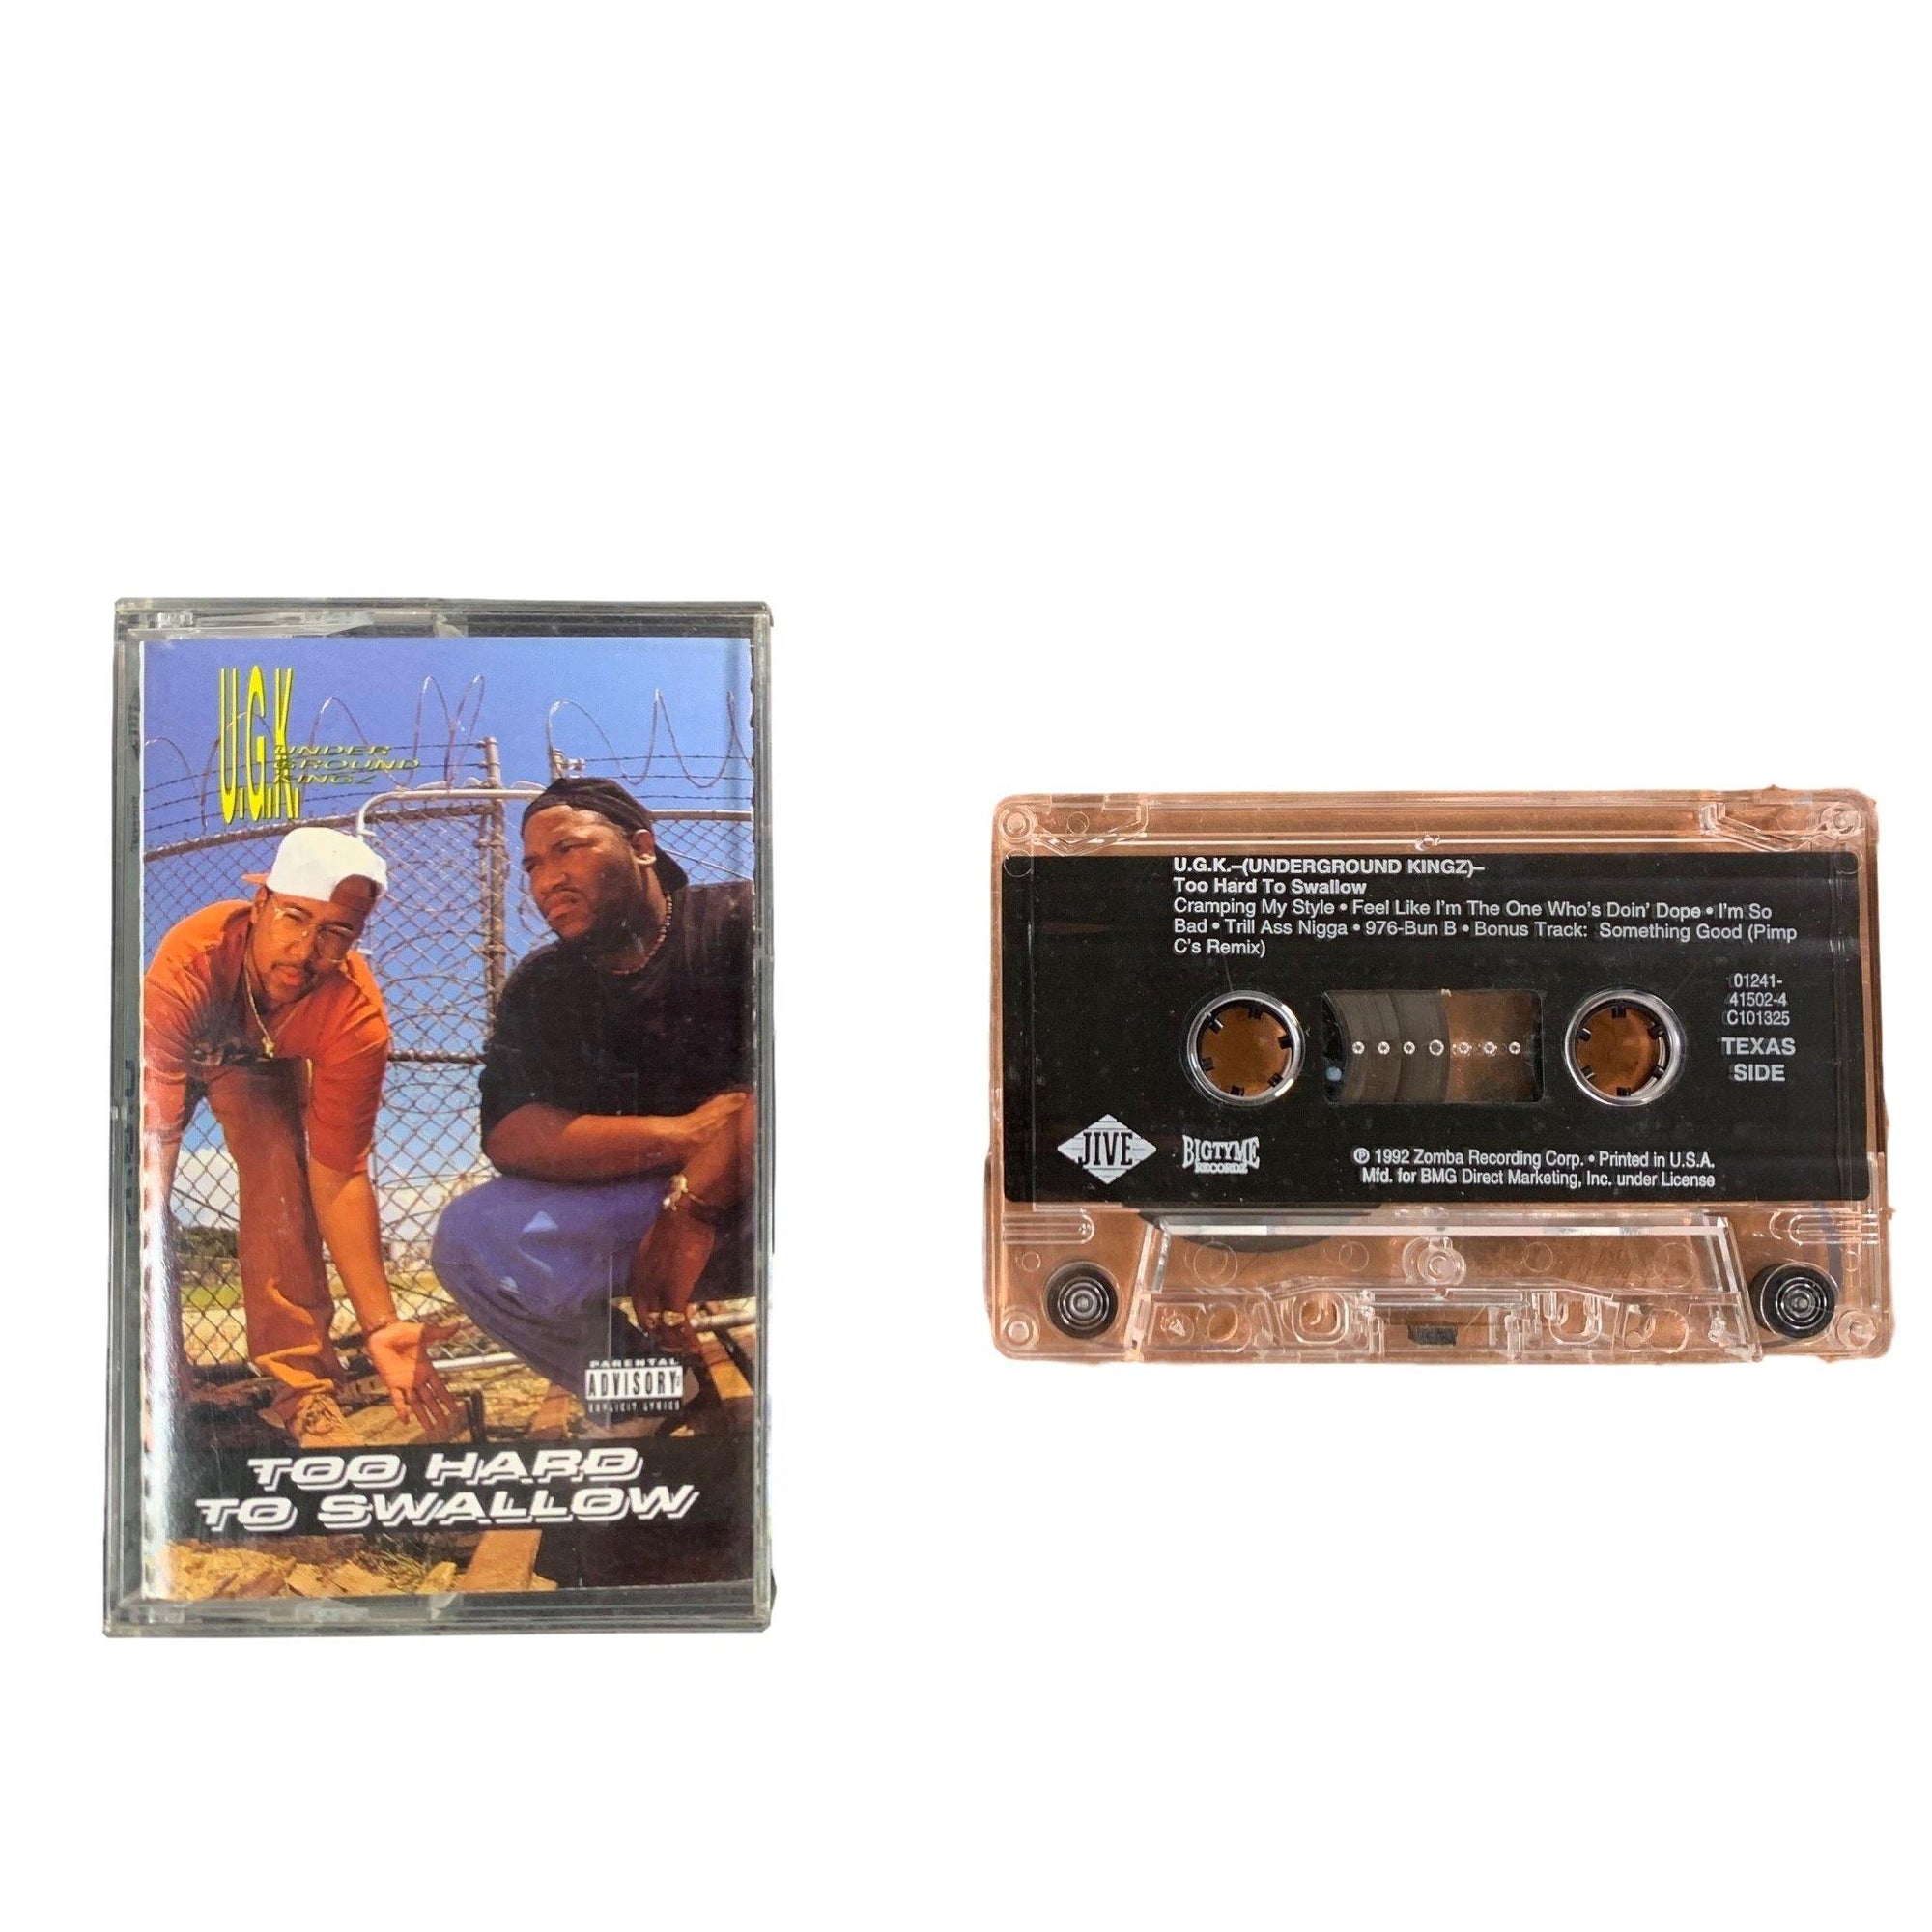 Vintage UGK "Too Hard To Swallow" Bigtyme Recordz Tape - jointcustodydc